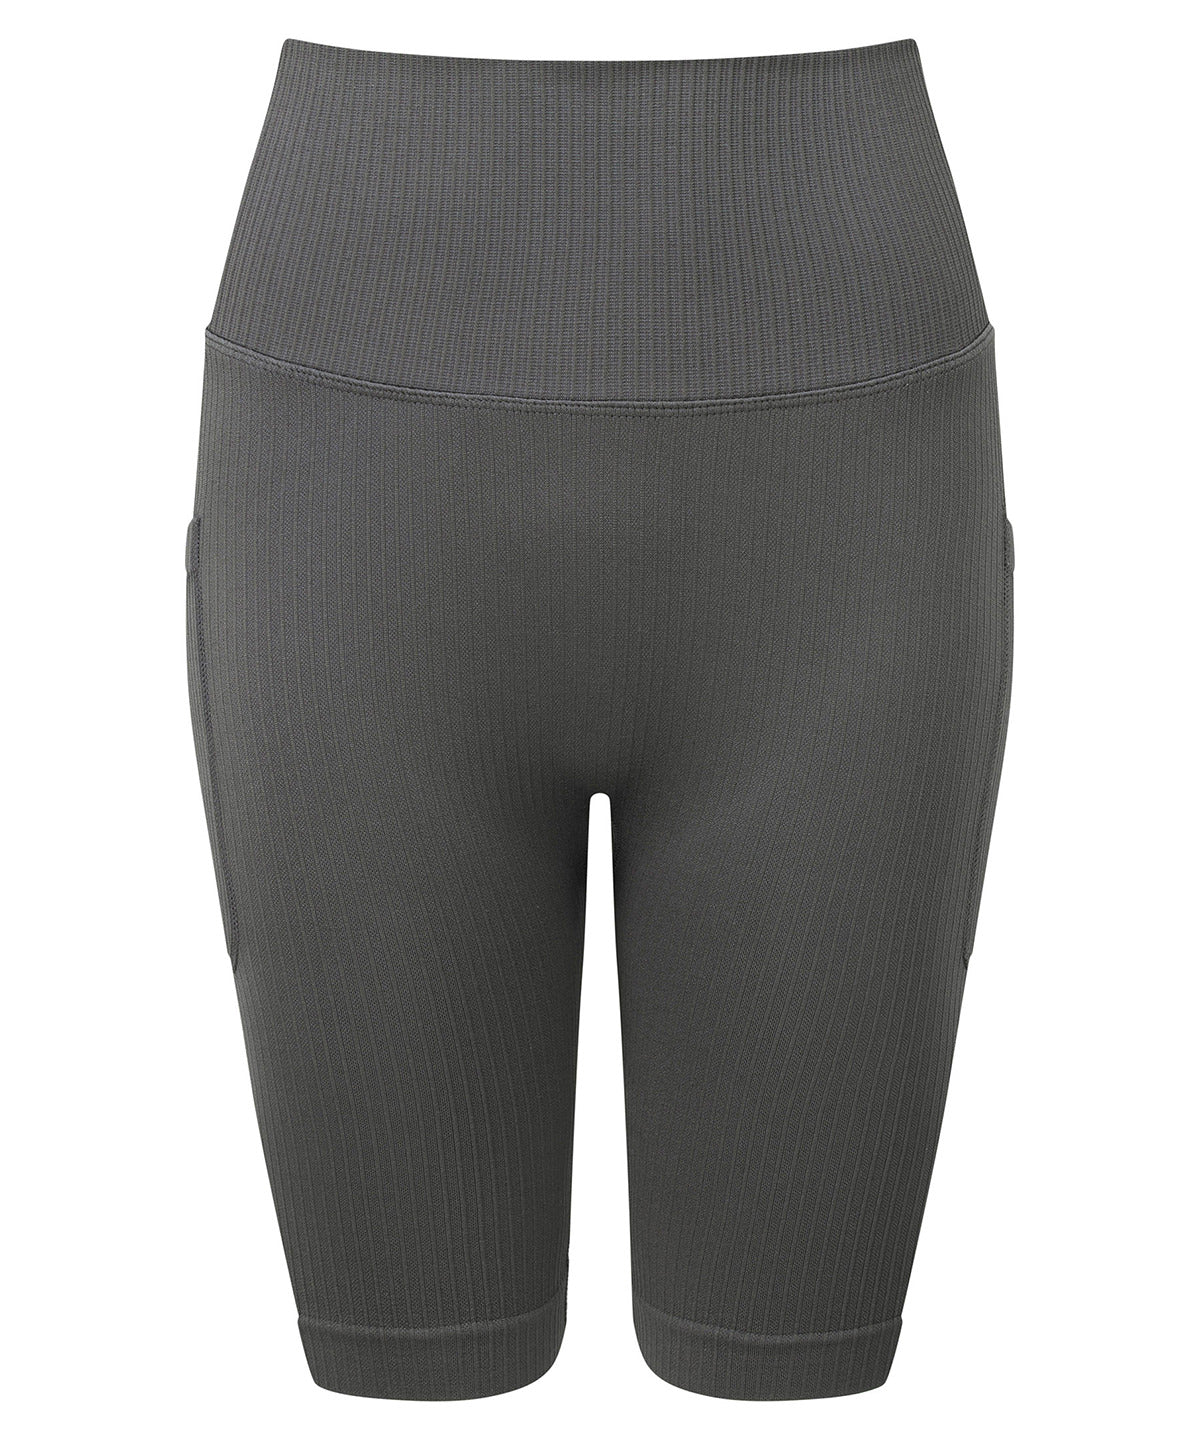 Women’s TriDri® Seamless '3D Fit' cycle shorts